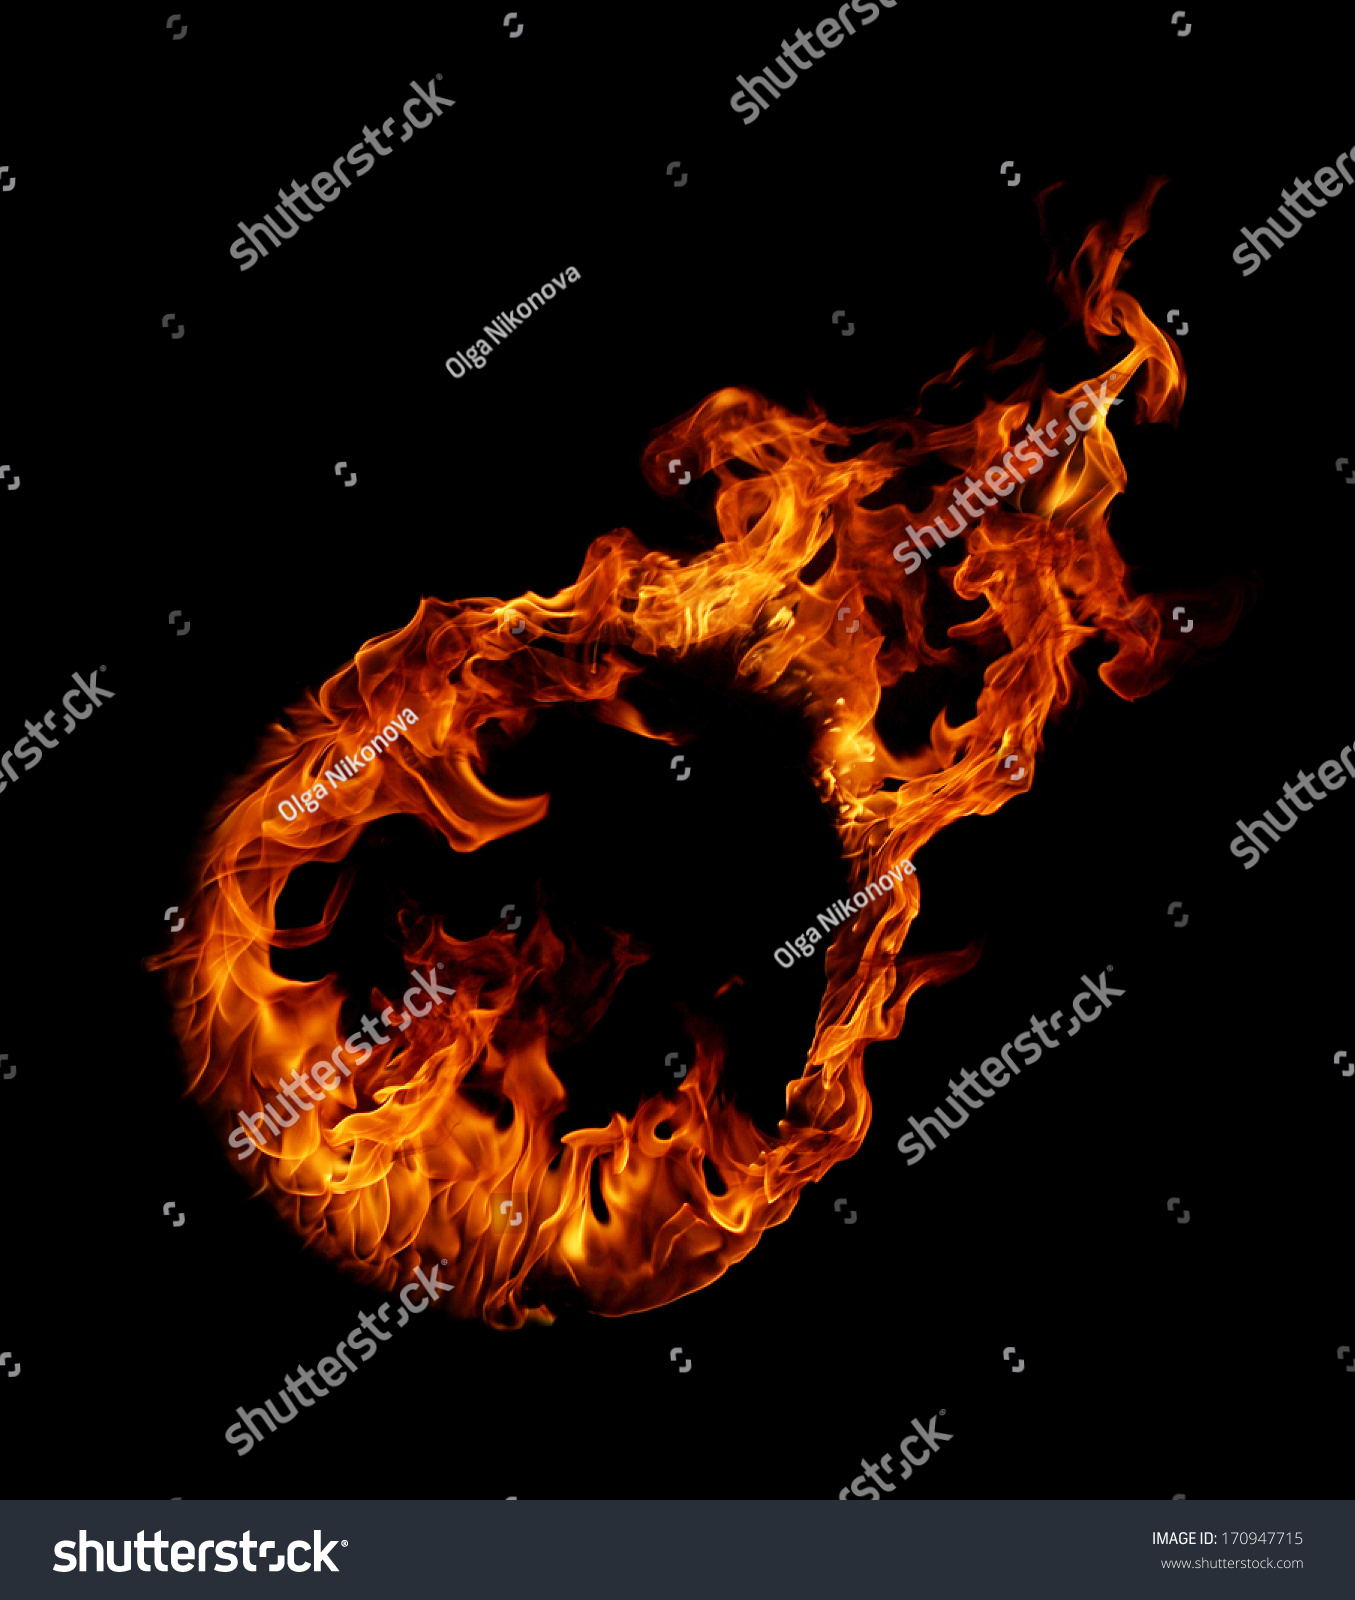 Ring Fire Stock Photo 170947715 - Shutterstock